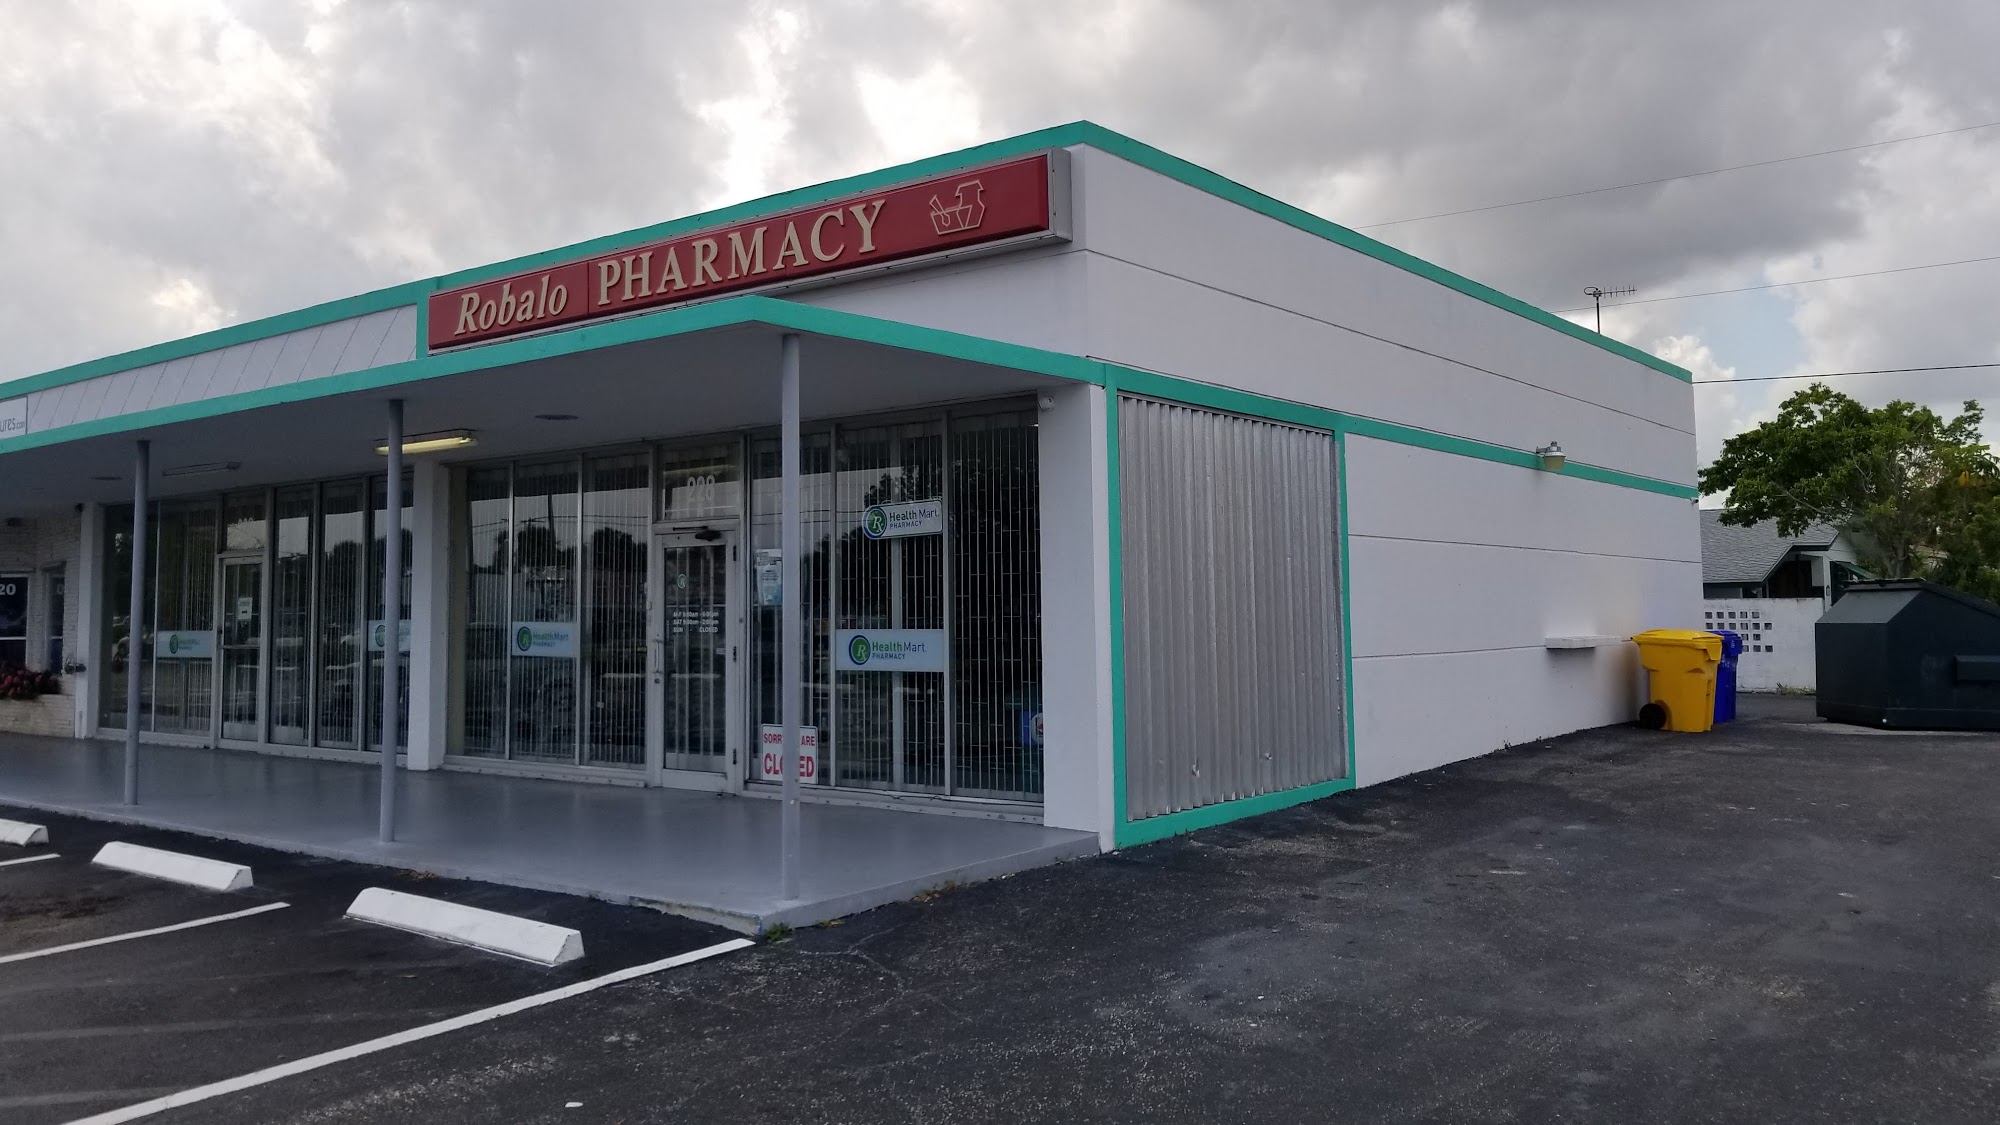 Robalo Pharmacy